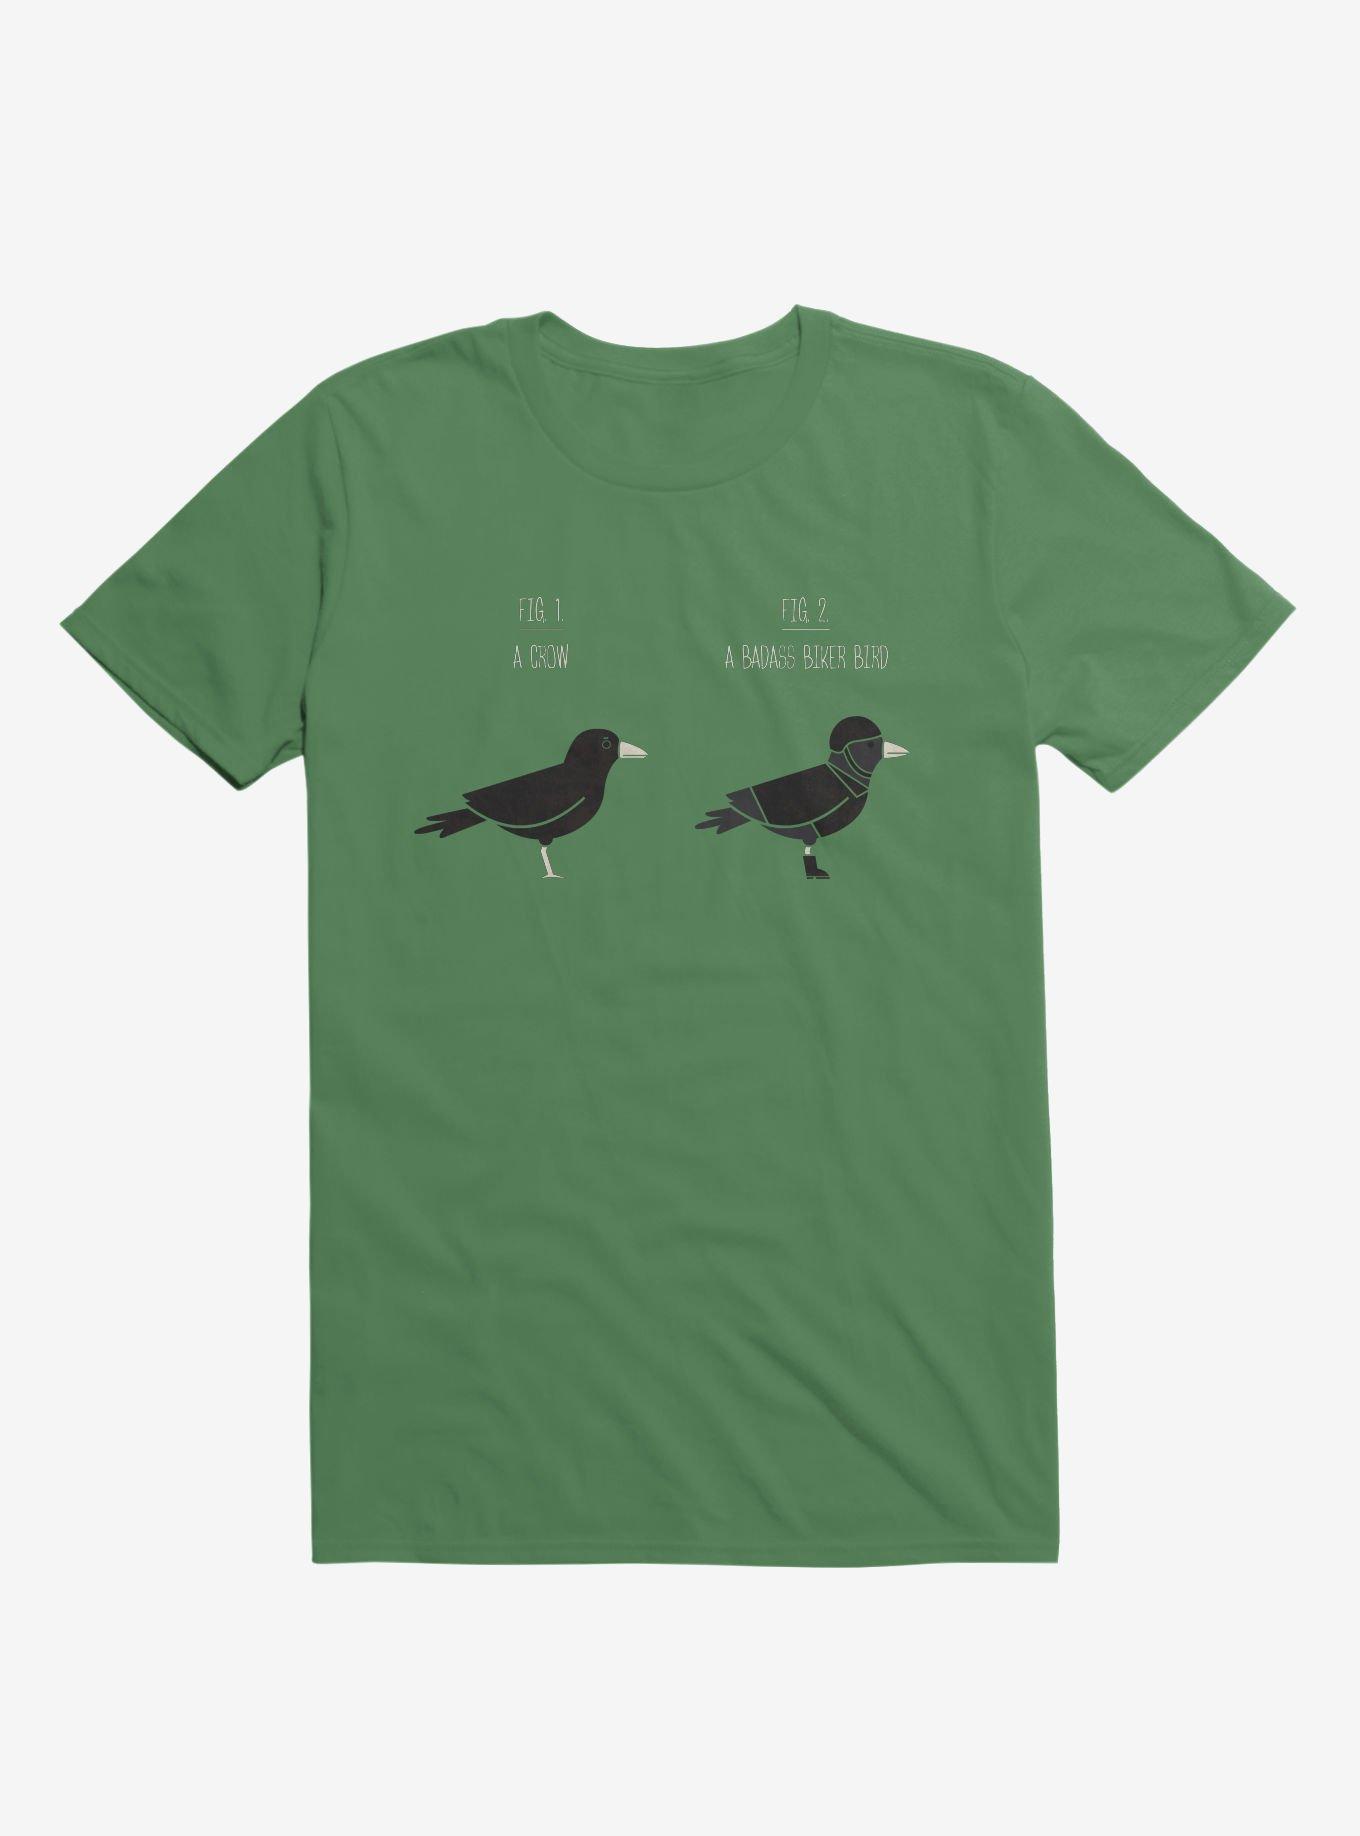 Know Your Birds A Crow Or Biker Bird Irish Green T-Shirt